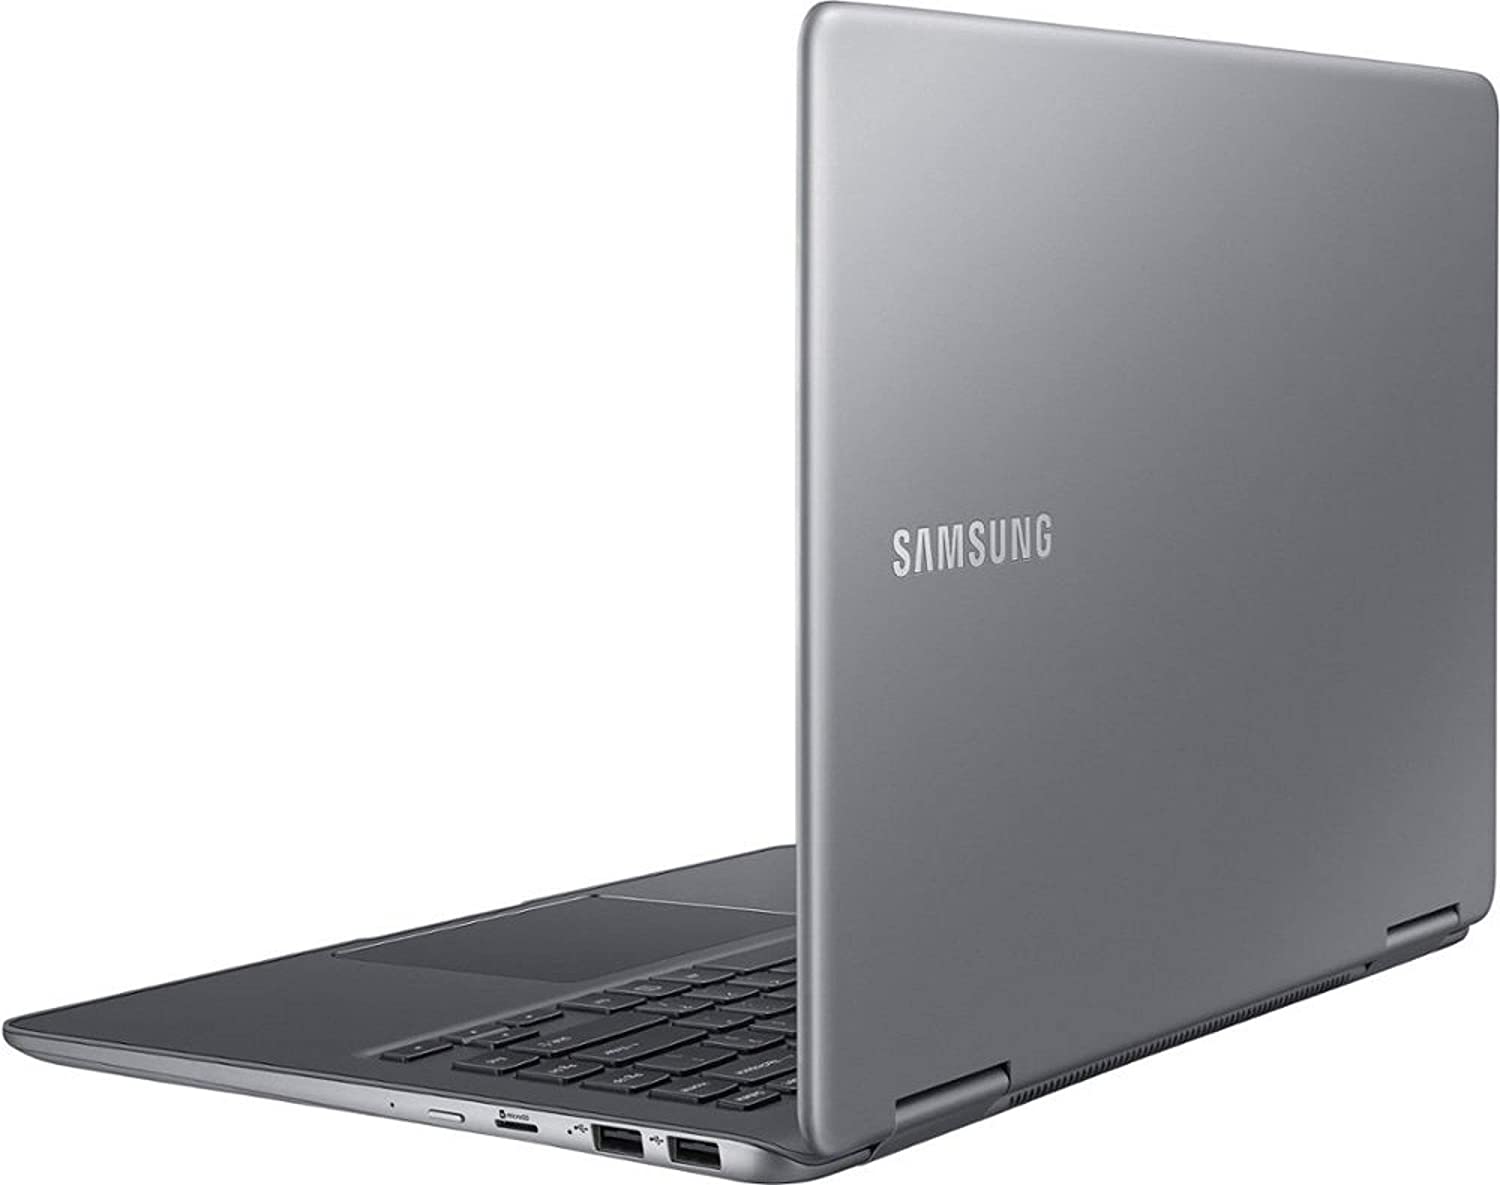 Samsung NP940X5N-X01US-RB Notebook 9 Pro 15" FHD i7-8550U 16GB 256GB W10H Silver - Certified Refurbished